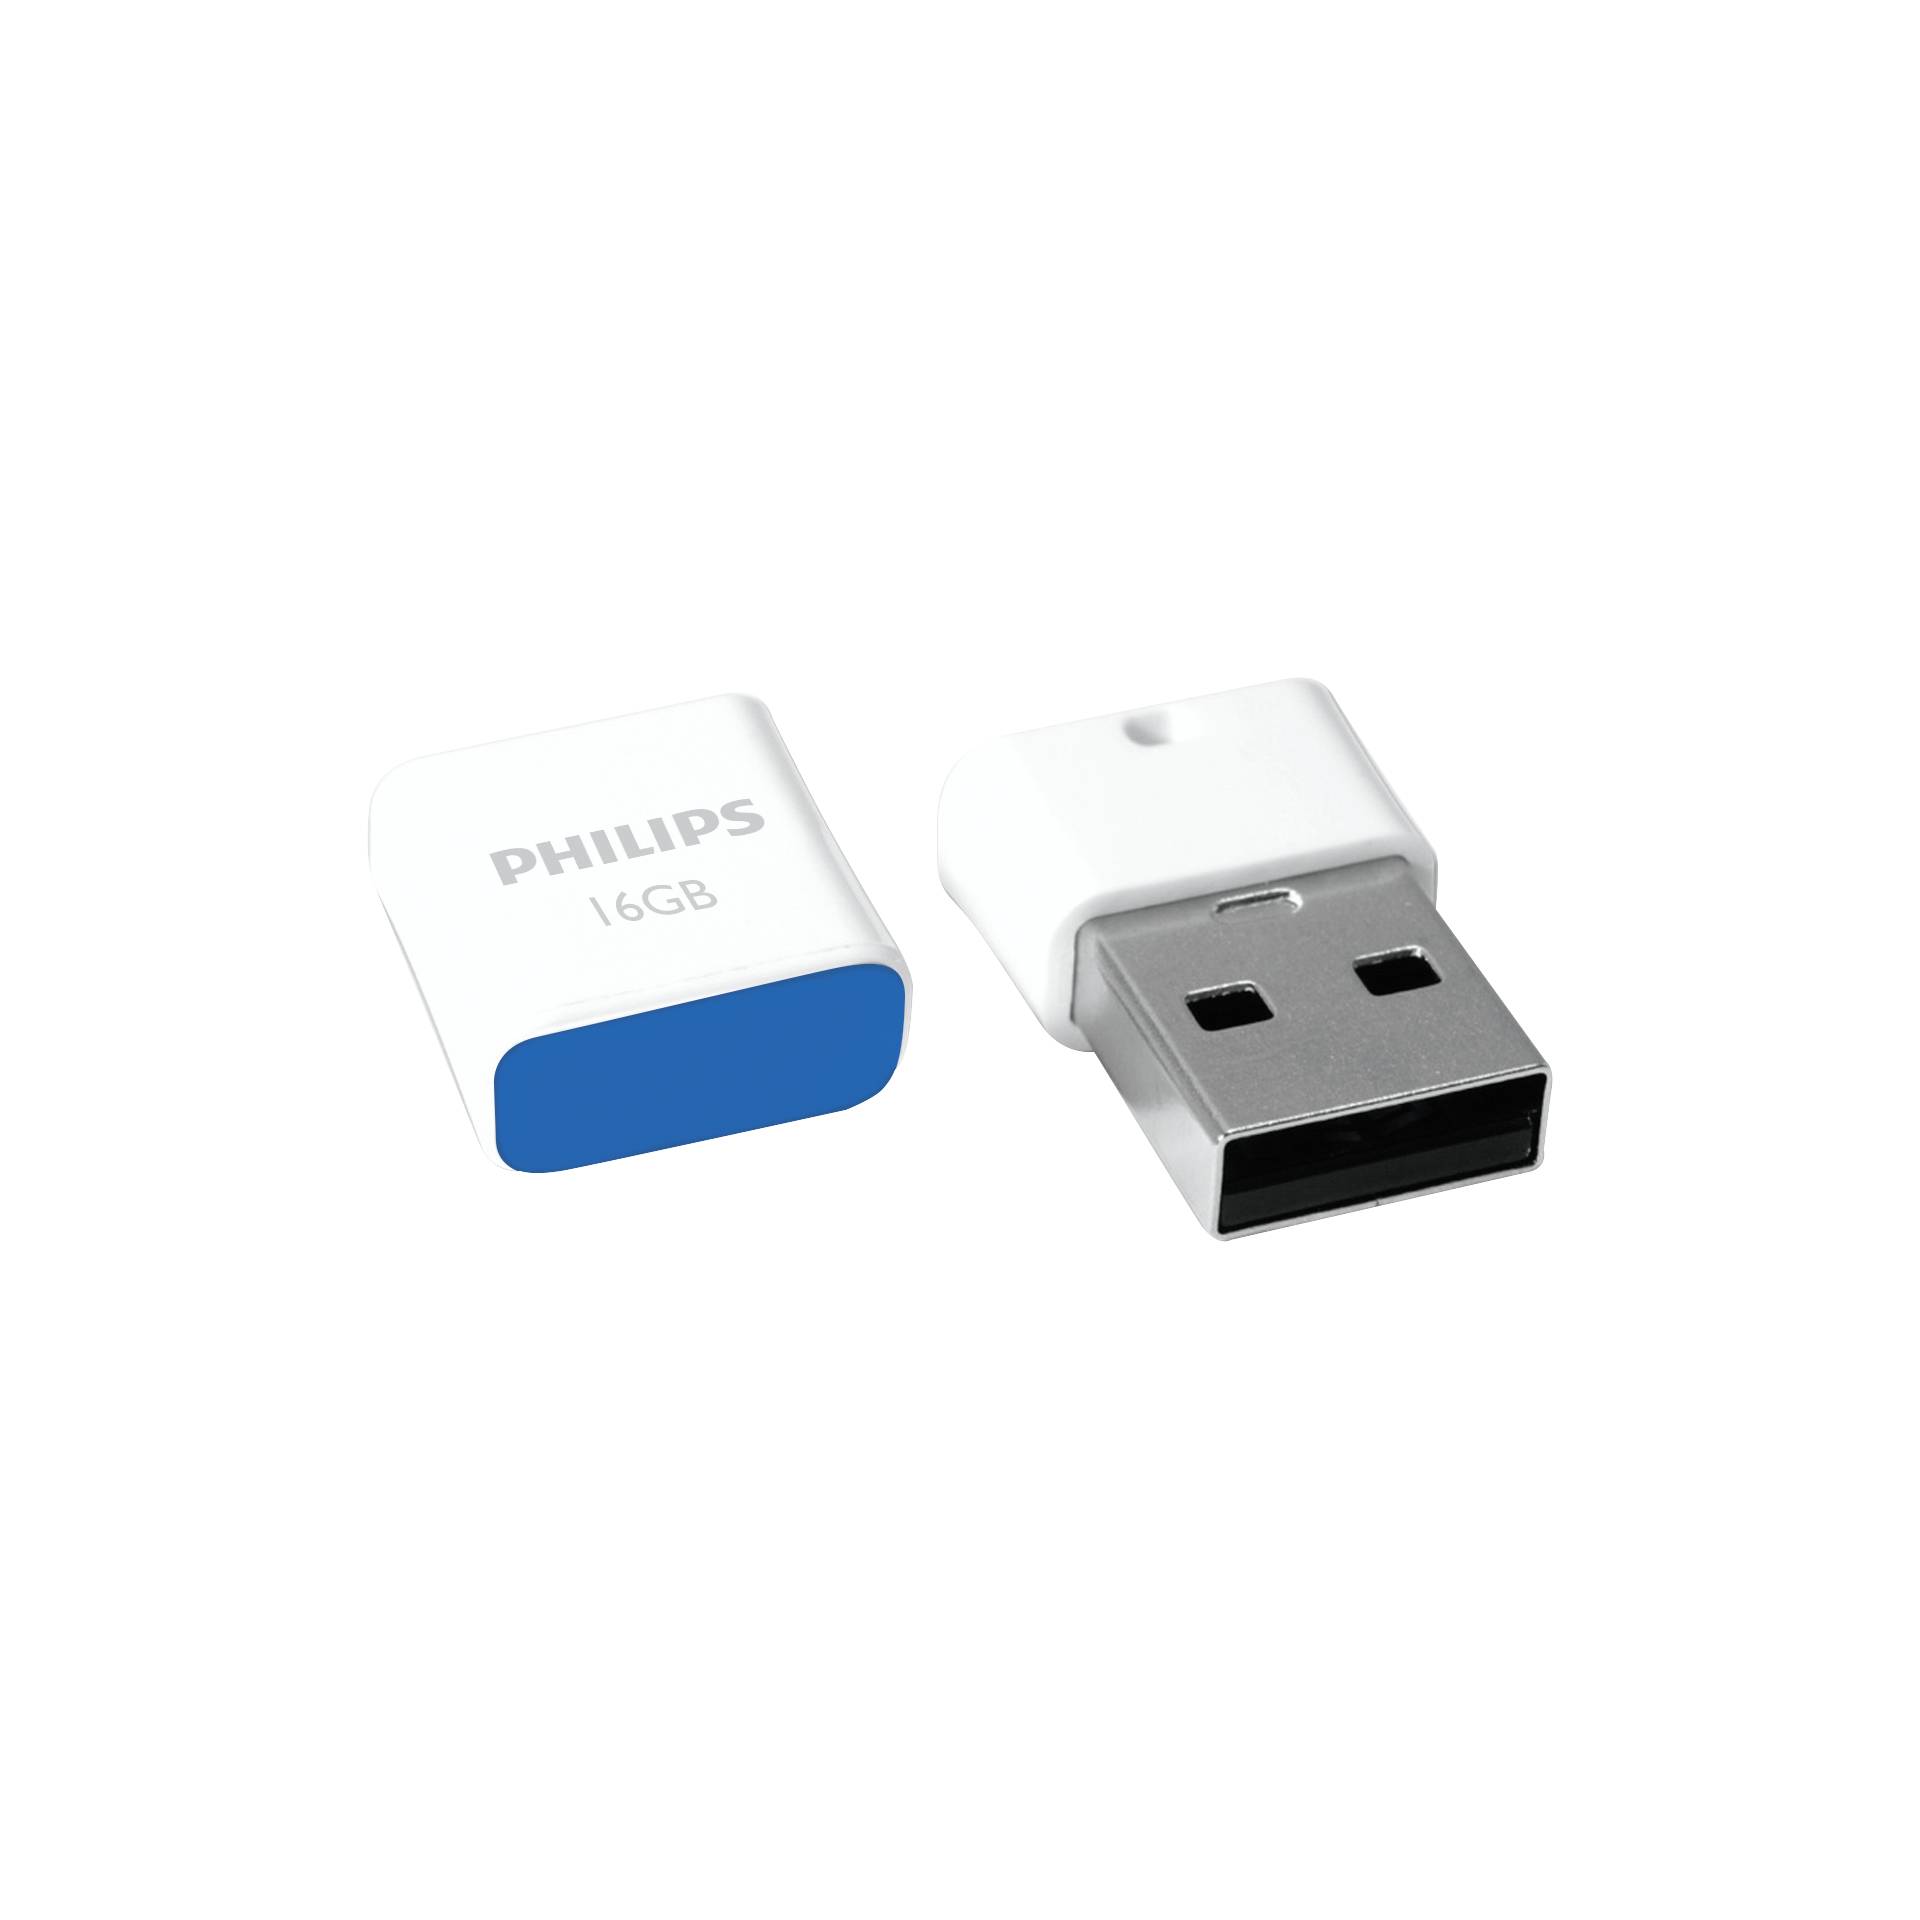 Philips USB 2.0             16GB Pico Edition blu